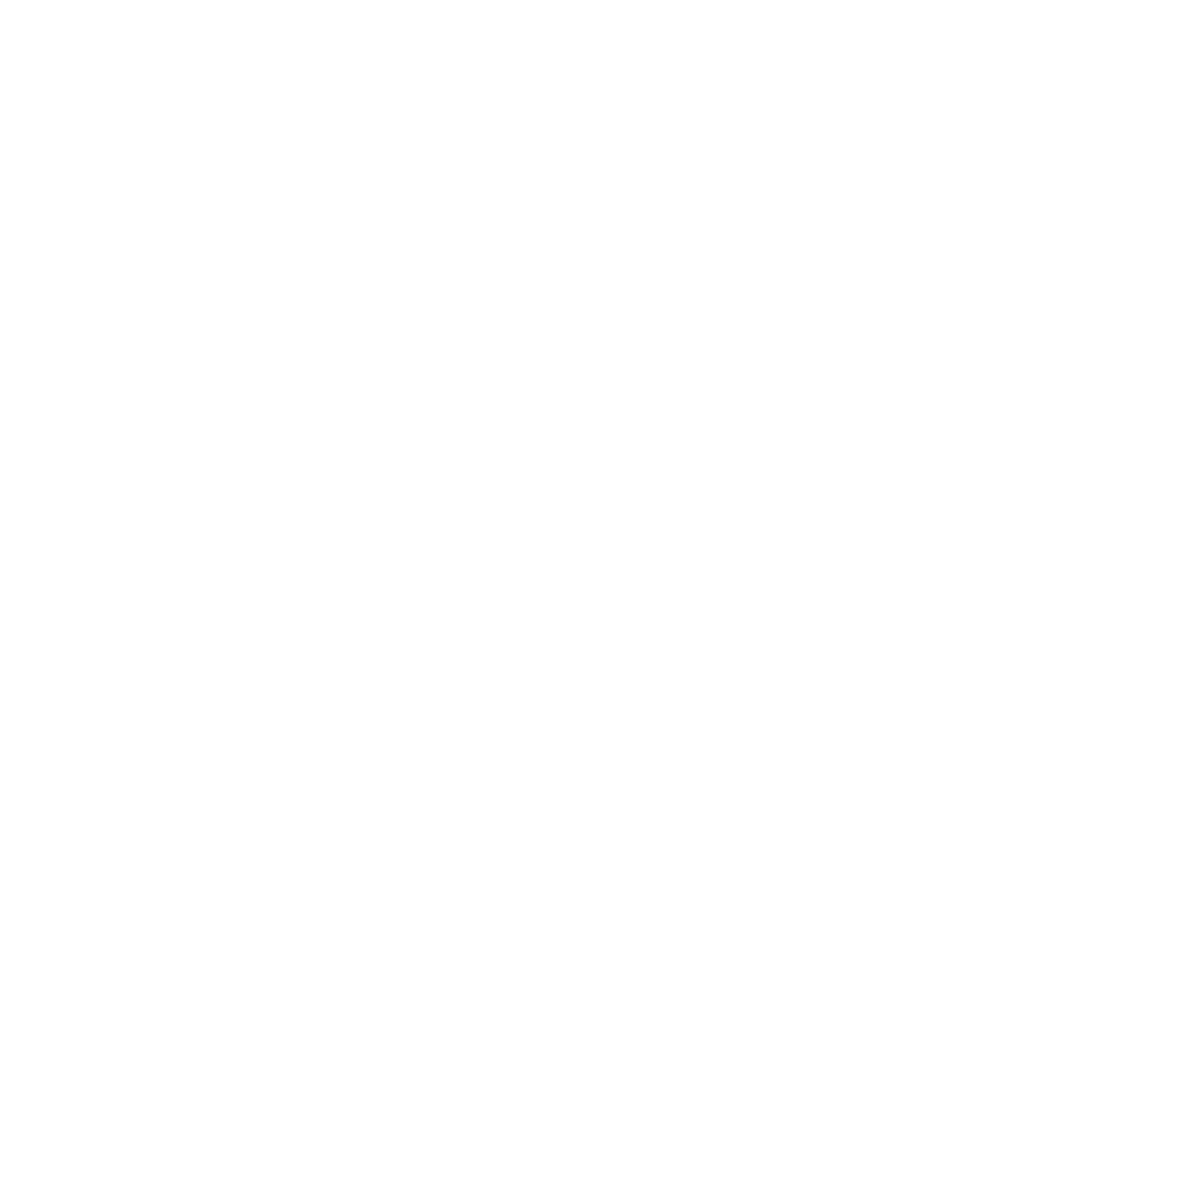 Namakool – Online Shopping Site